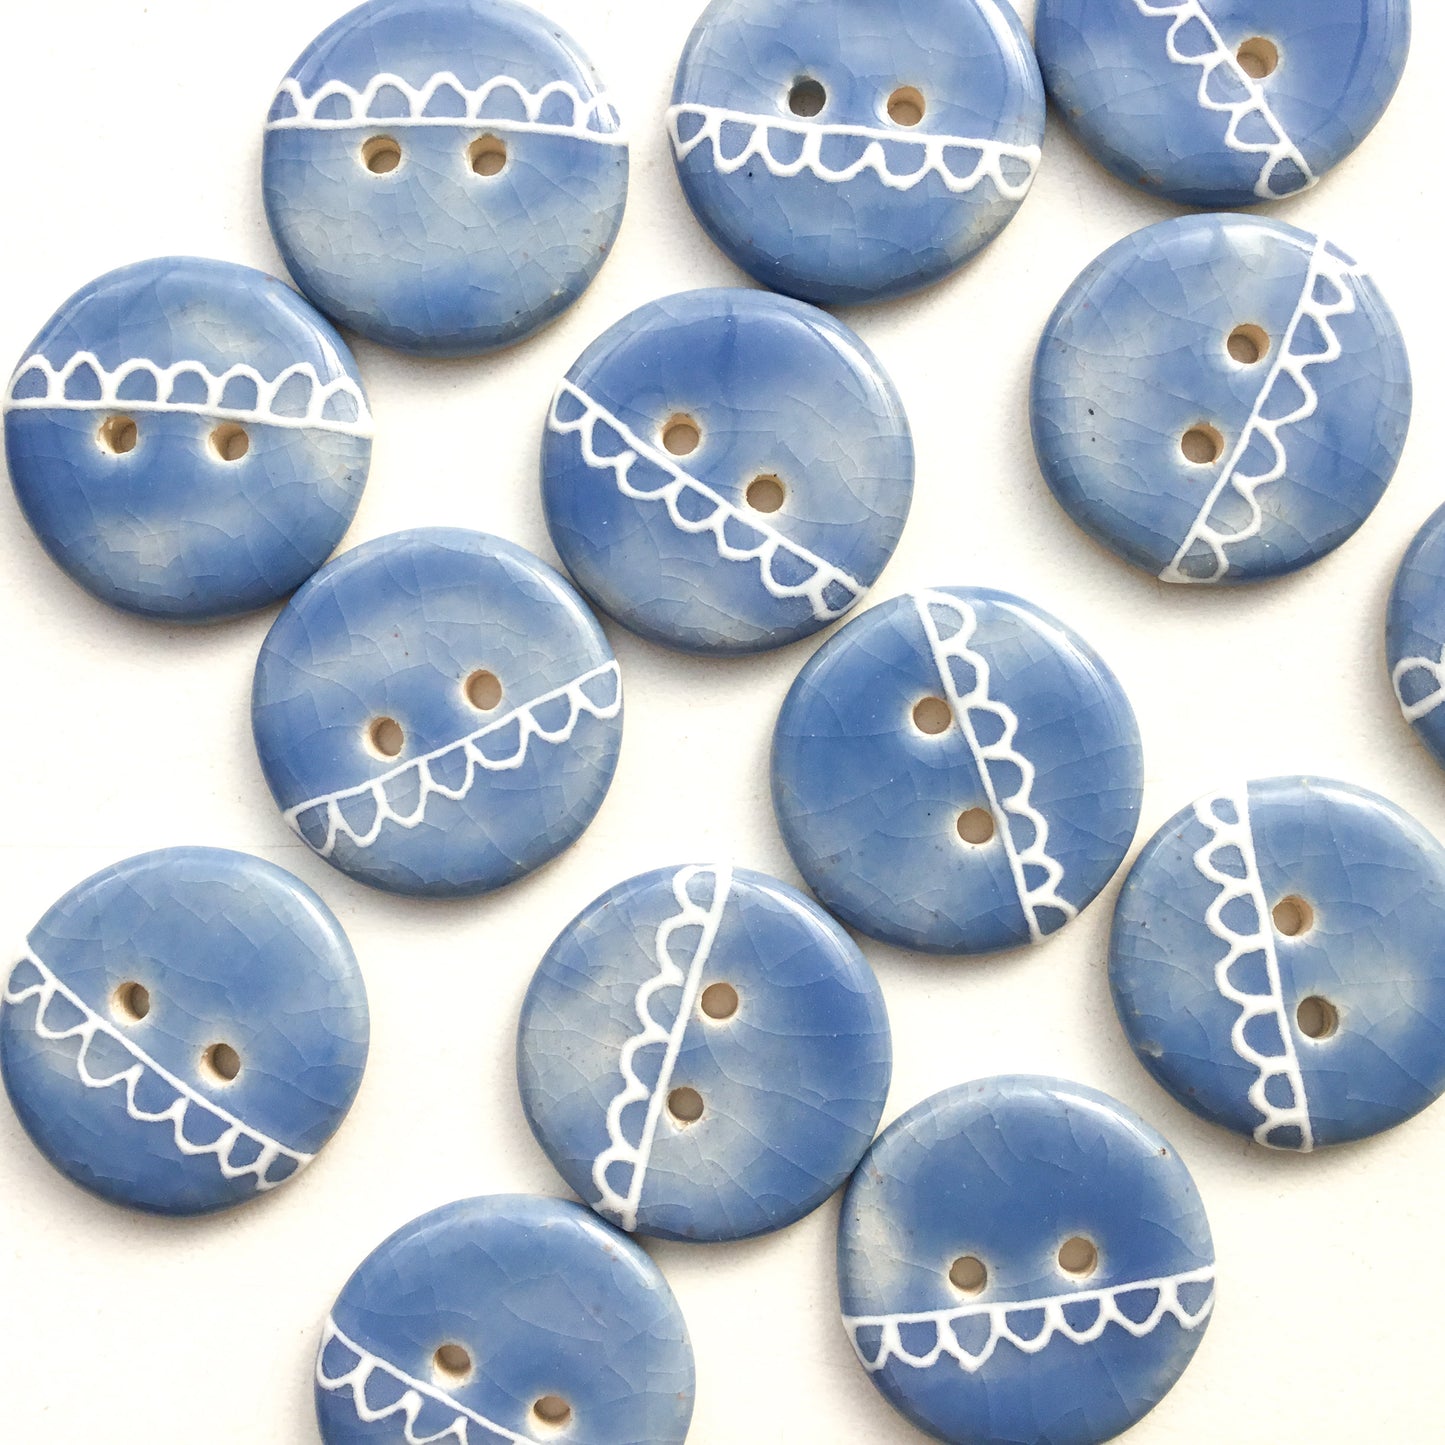 Cloudy Blues & Lace Ceramic Buttons - 7/8"